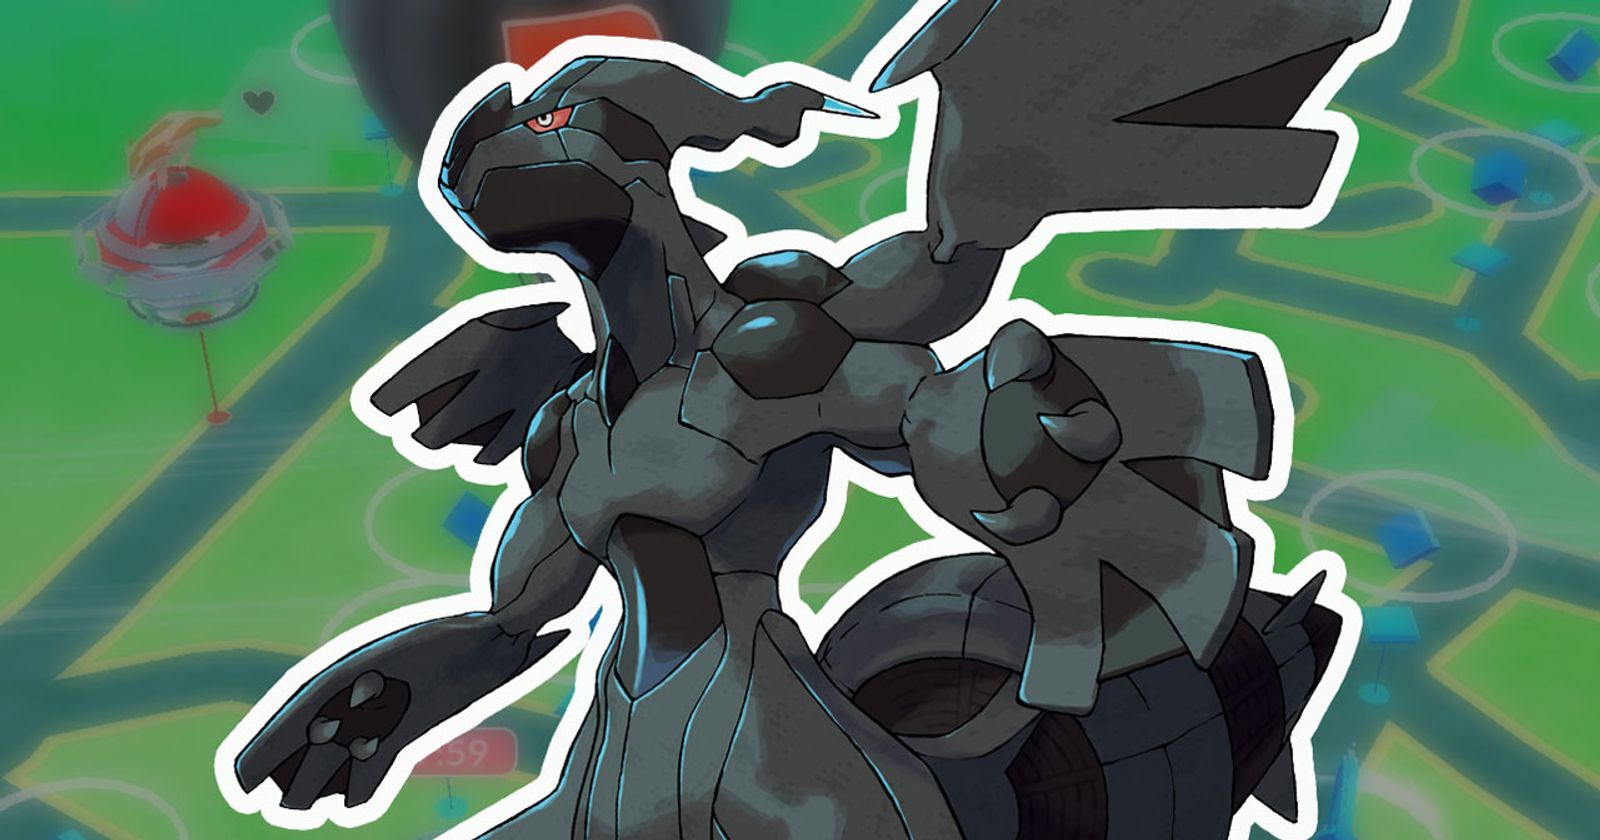 Zekrom Pokémon GO Raid Battle Tips